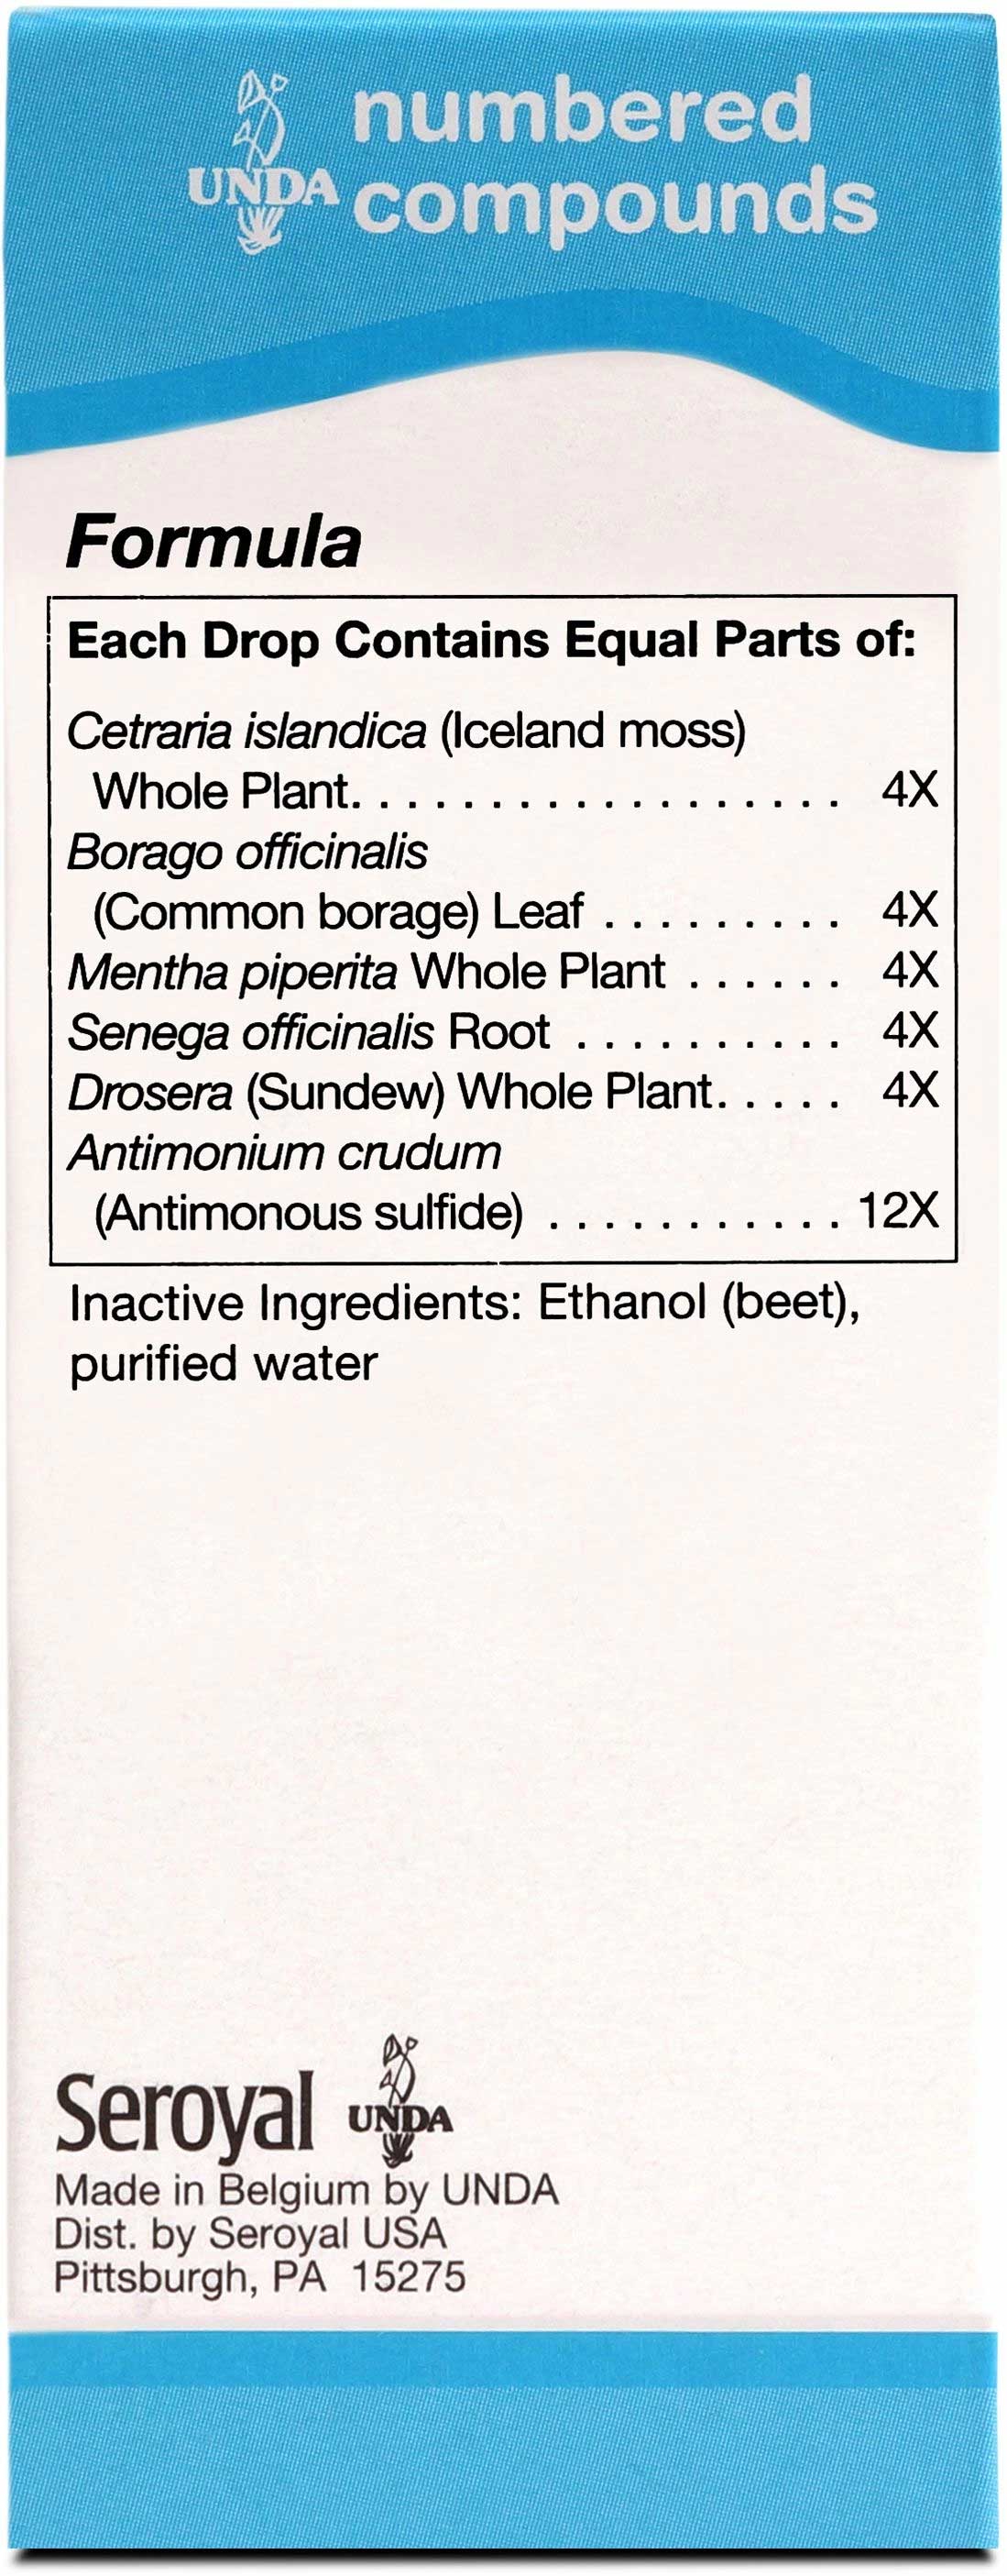 UNDA #27 Ingredients